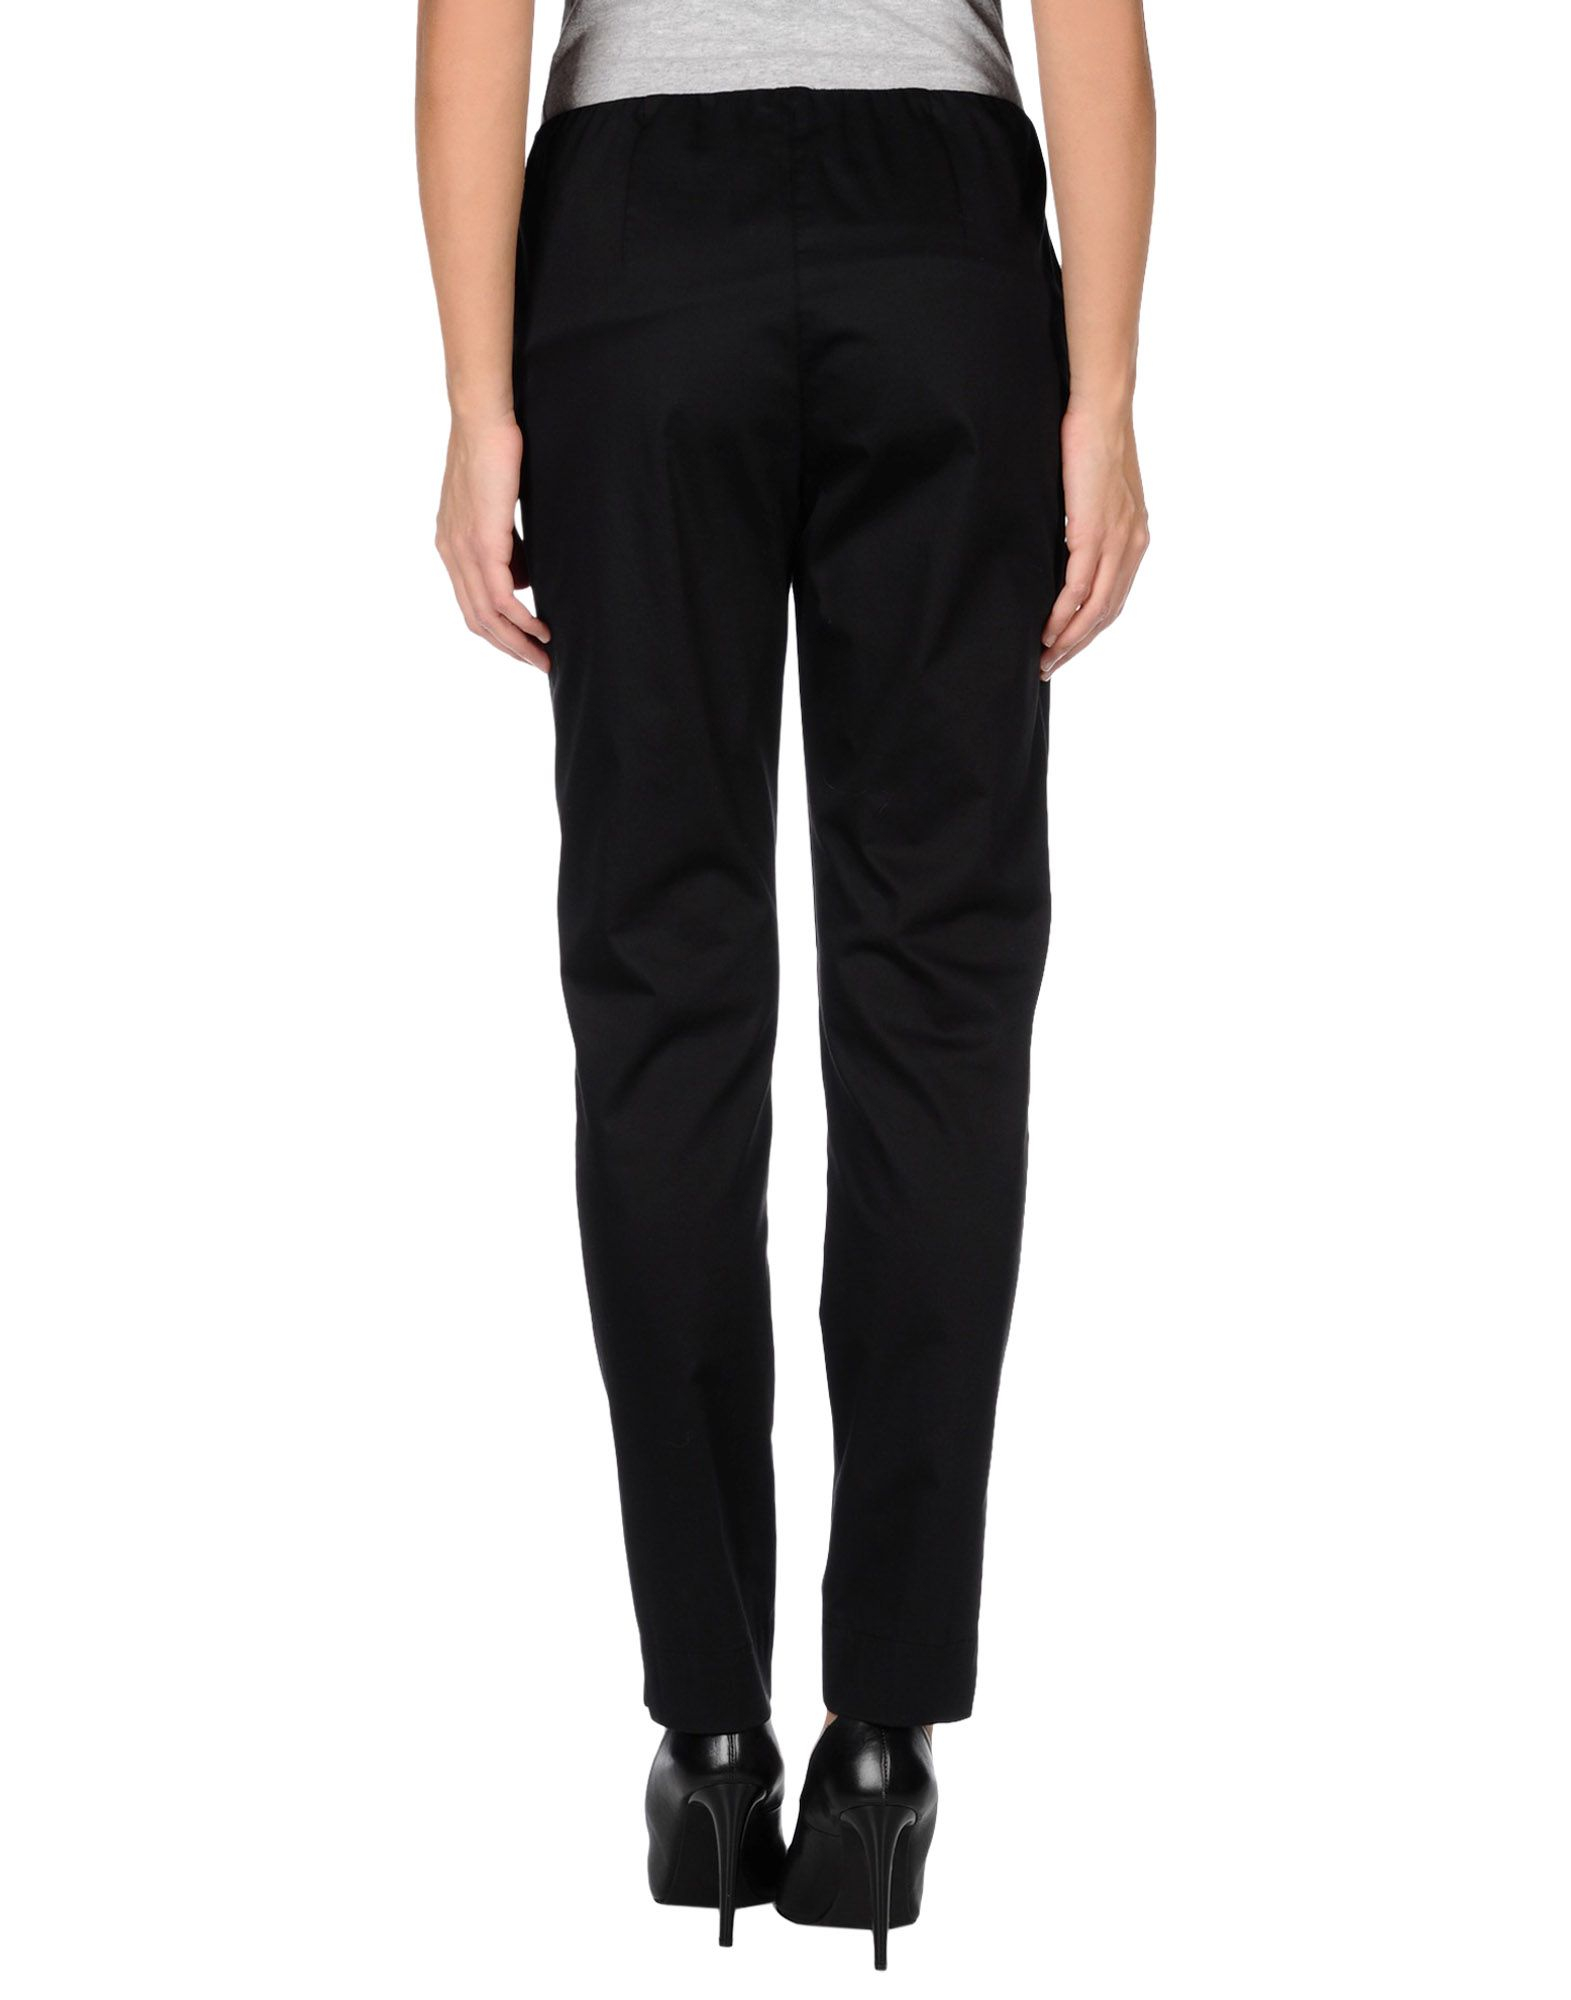 parosh black casual pants product 1 081319463 normal